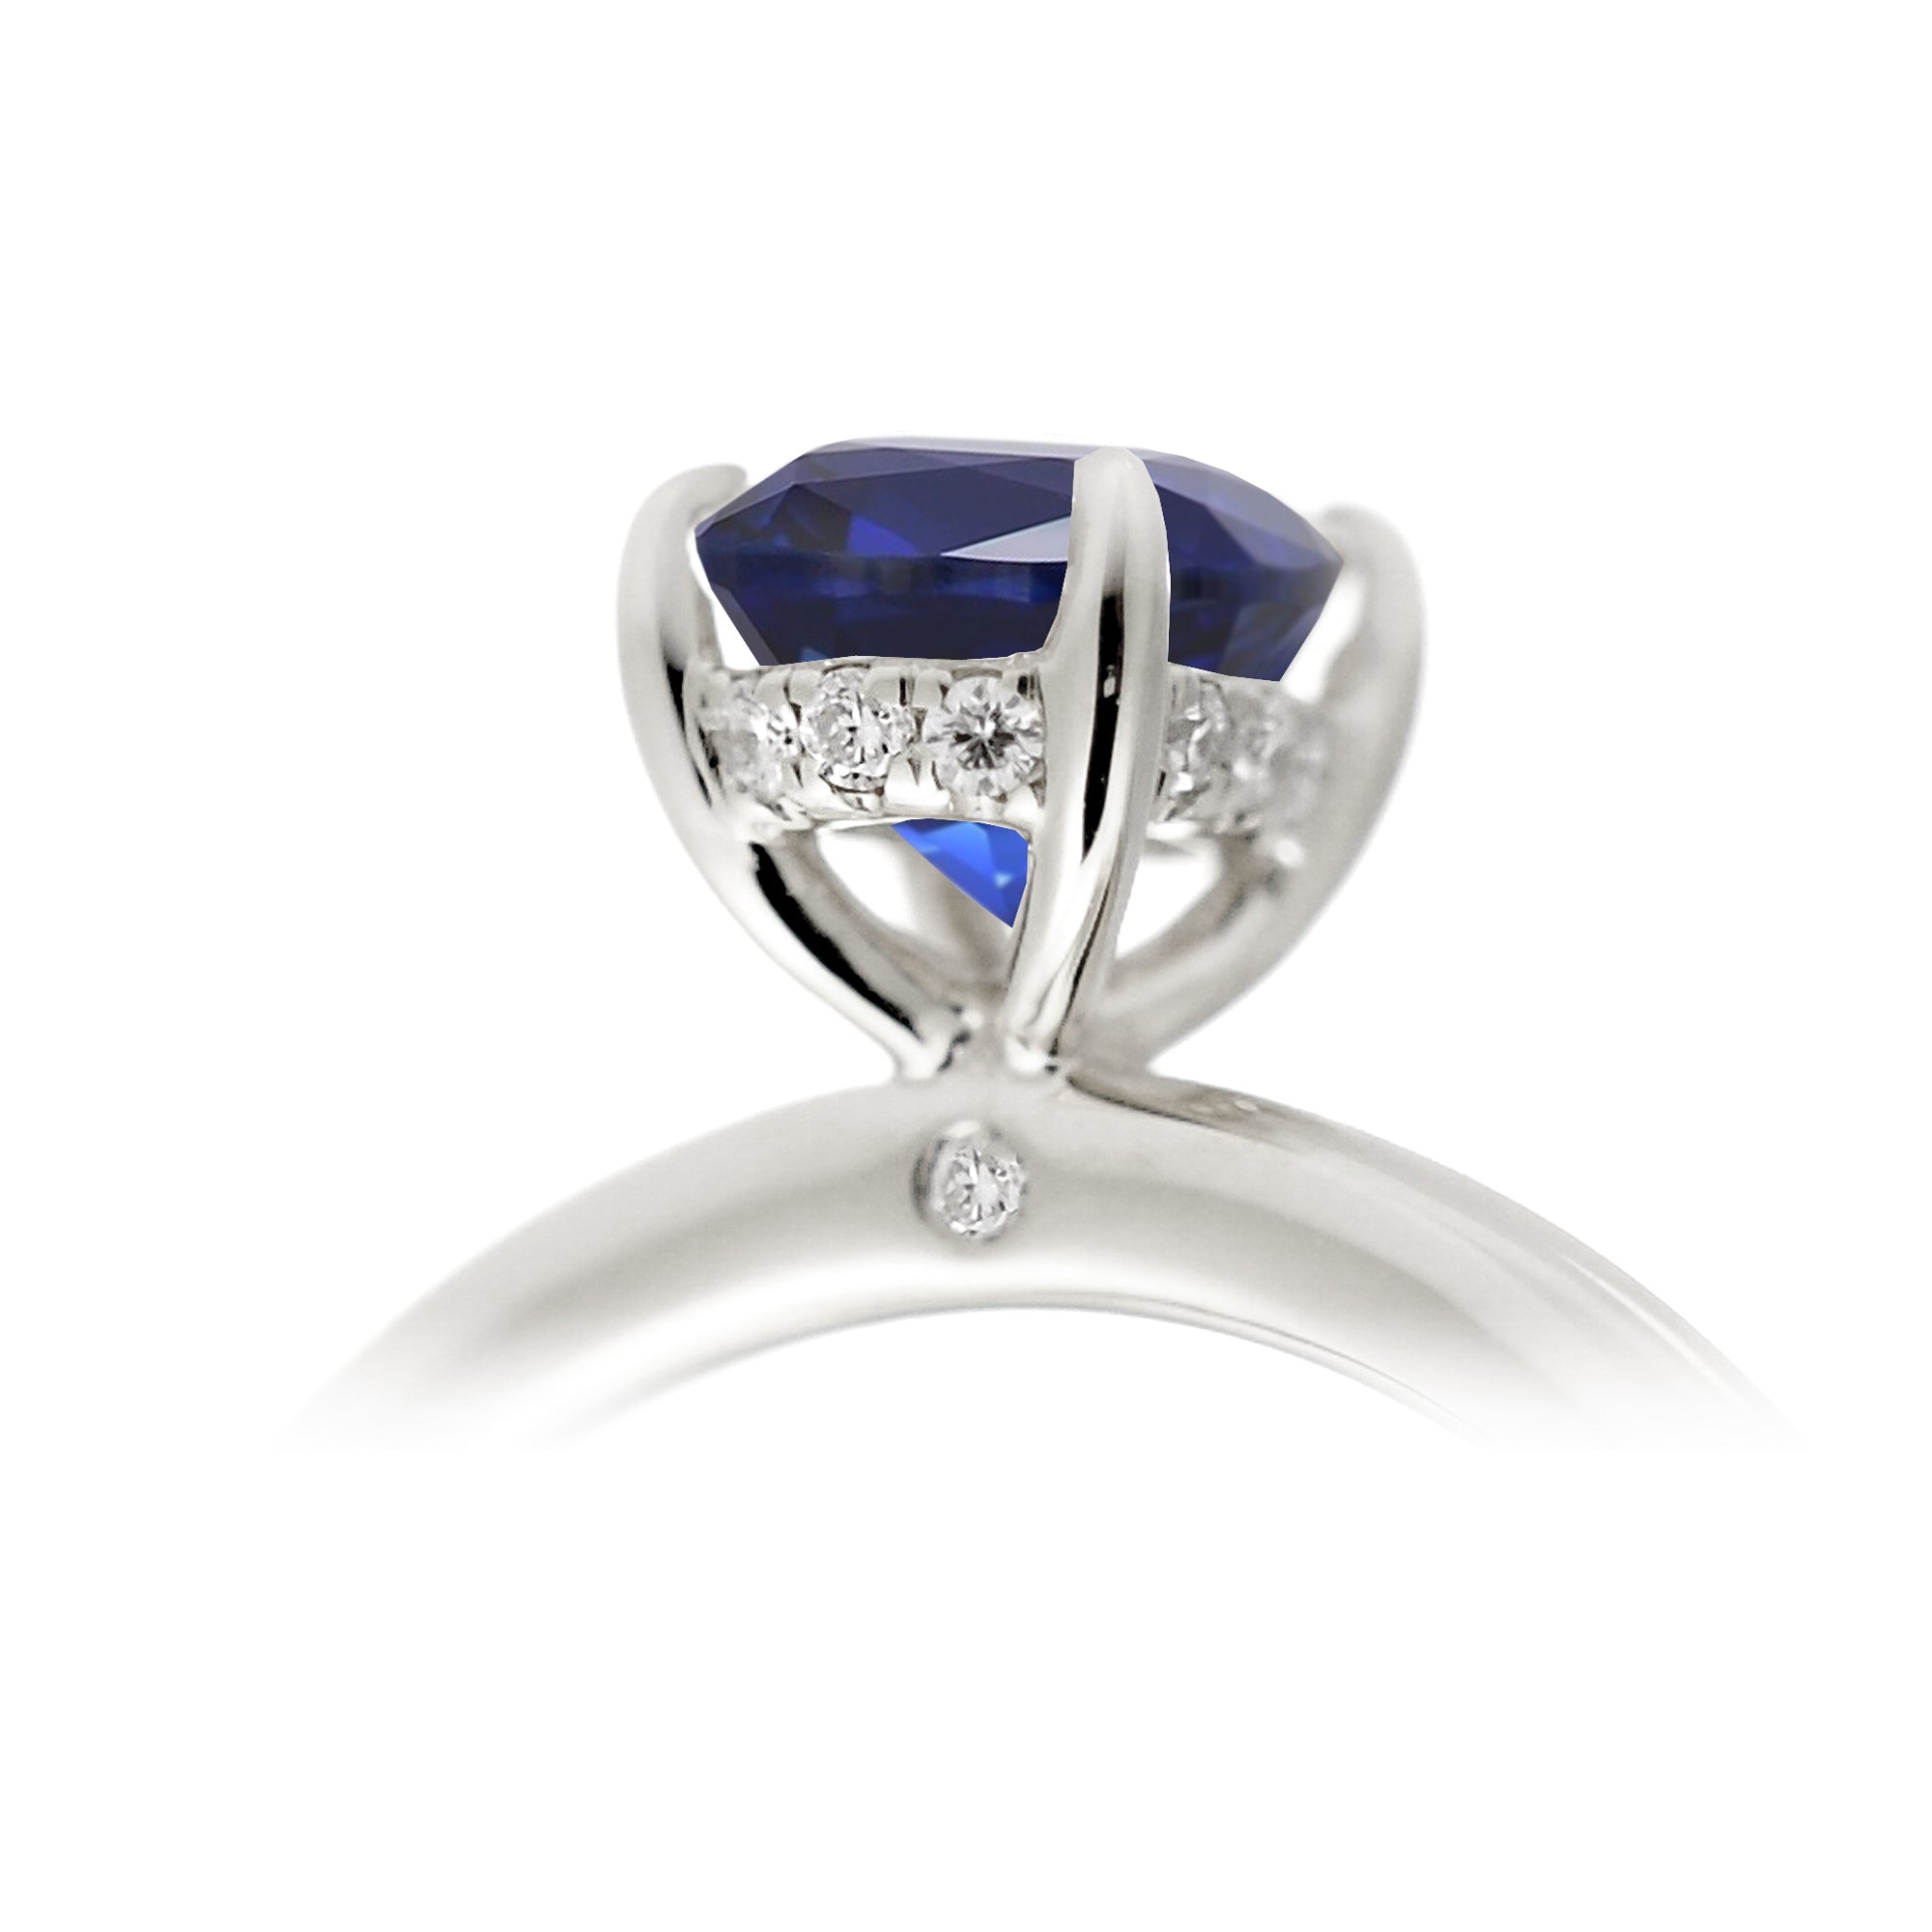 Round cut blue lab-grown sapphire with diamond hidden halo on white gold